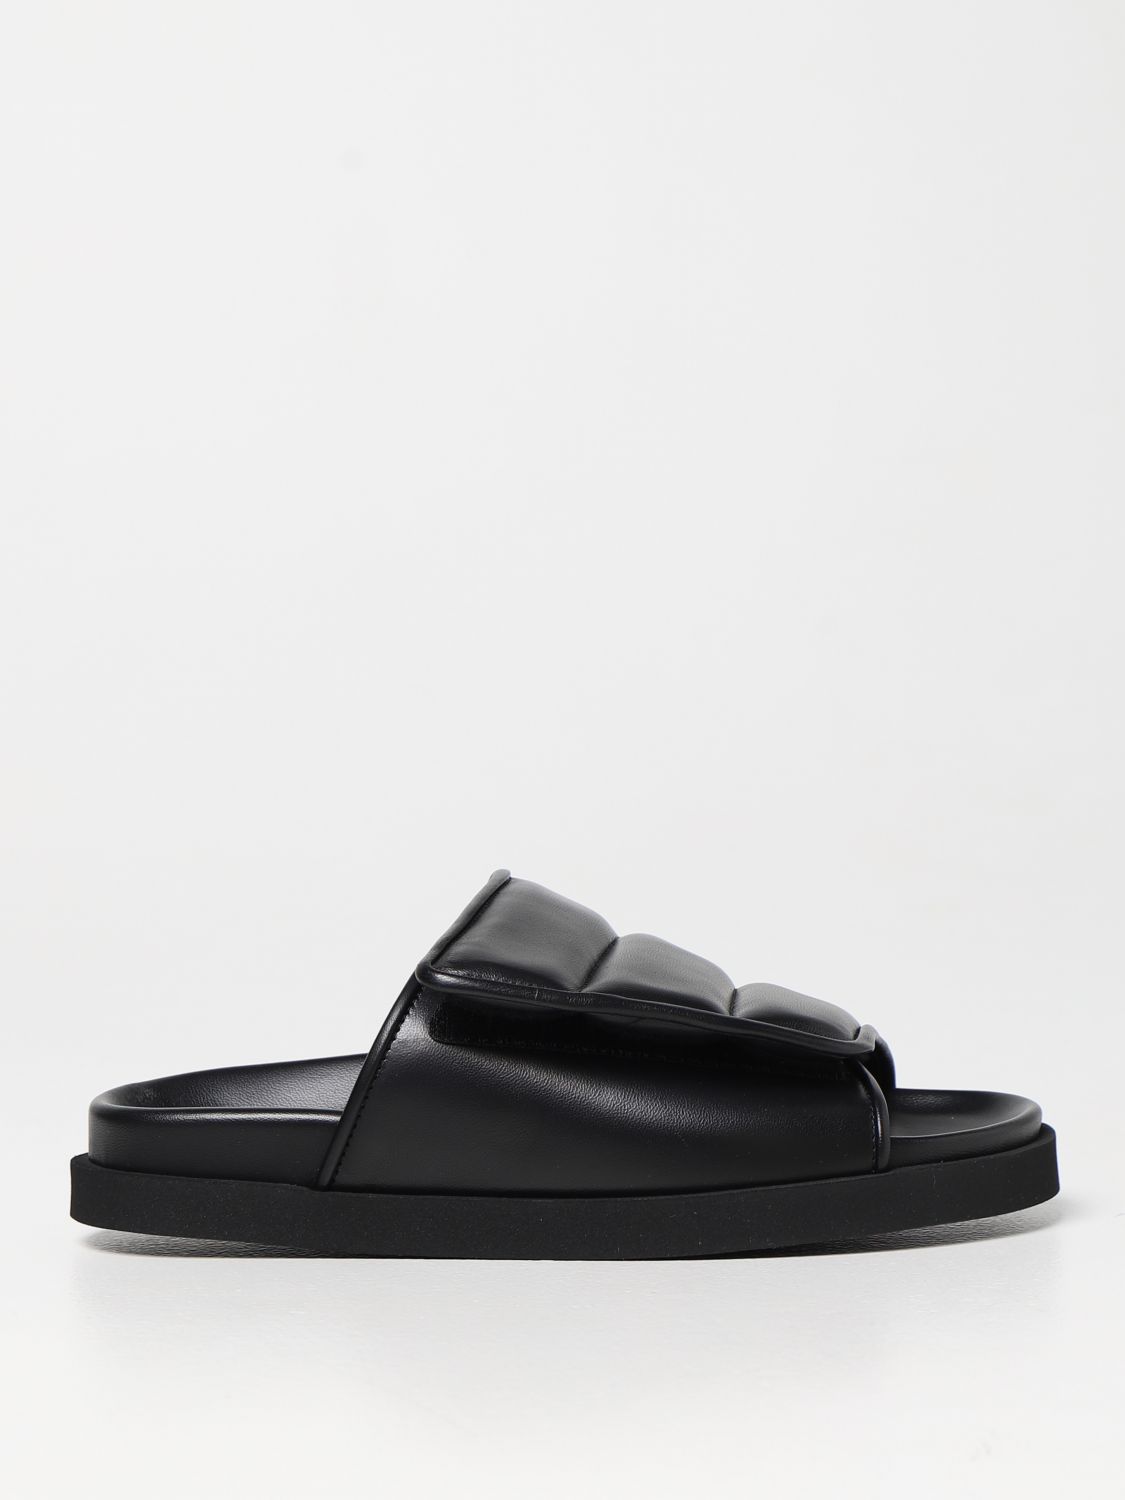 Gia Borghini Outlet: flat sandals for woman - Black | Gia Borghini flat